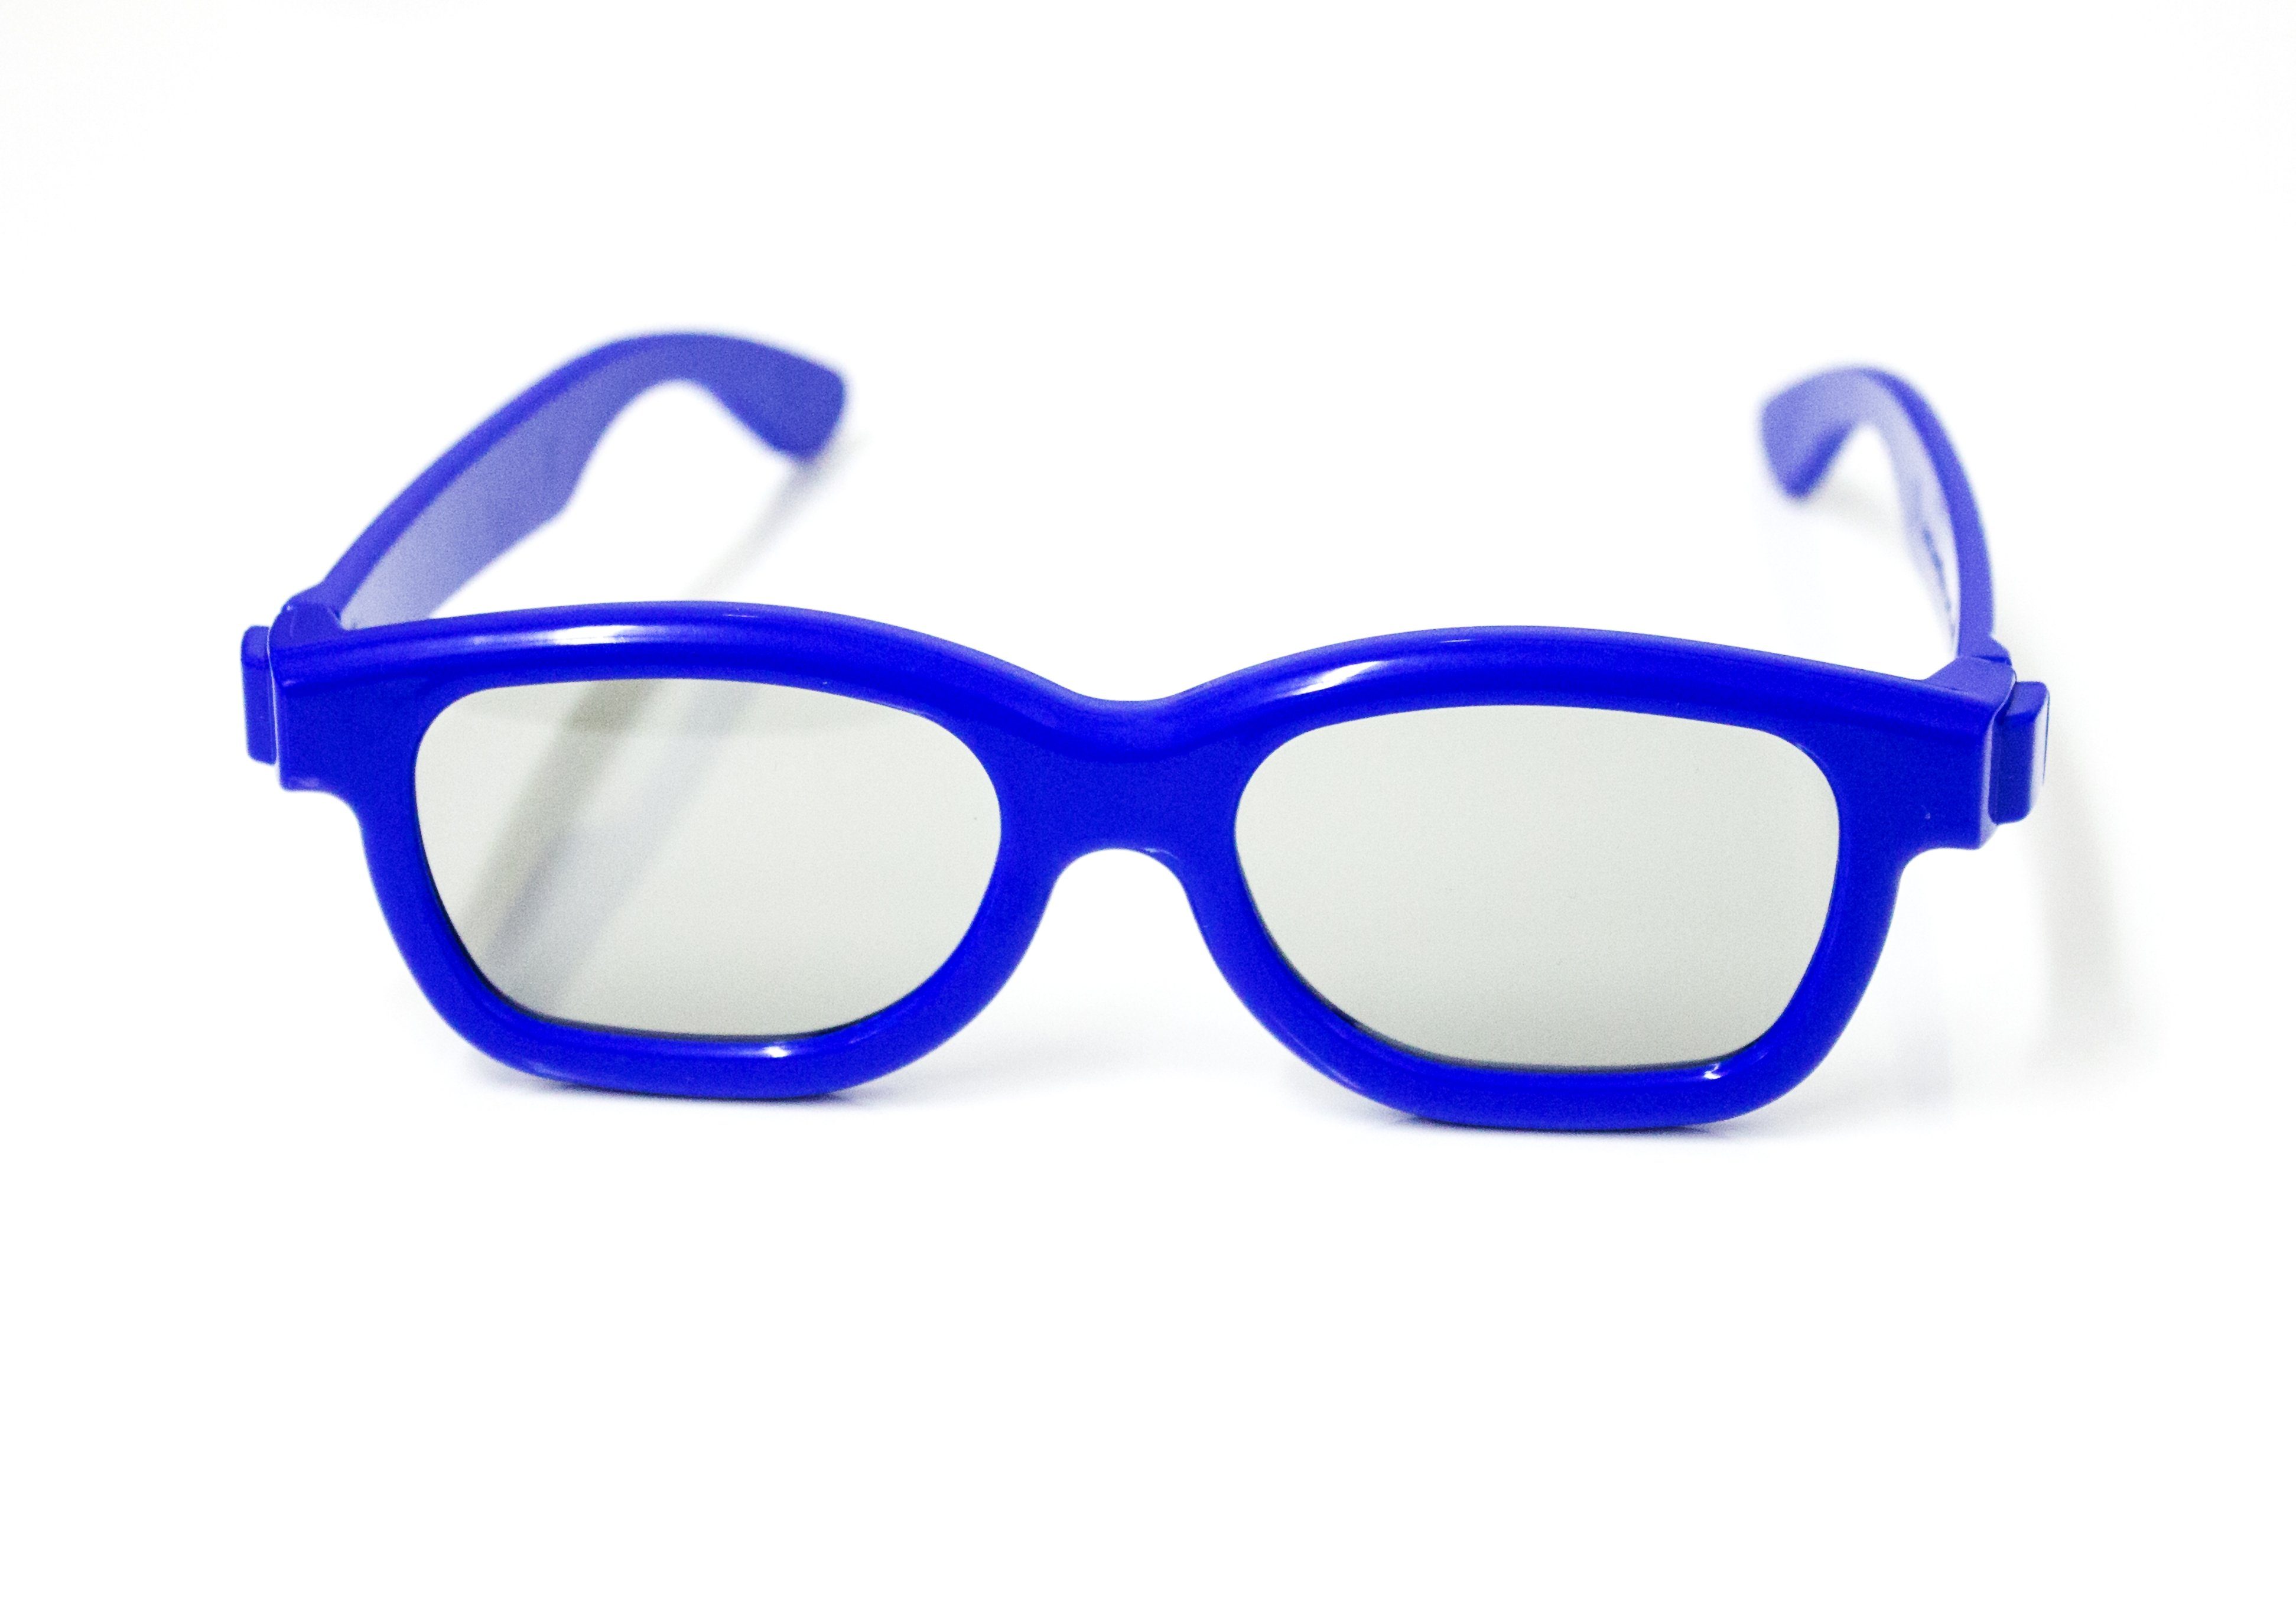 PRECORN 3D-Brille 3D Kinder-Brille blau Universale Passive für Cinema 3D